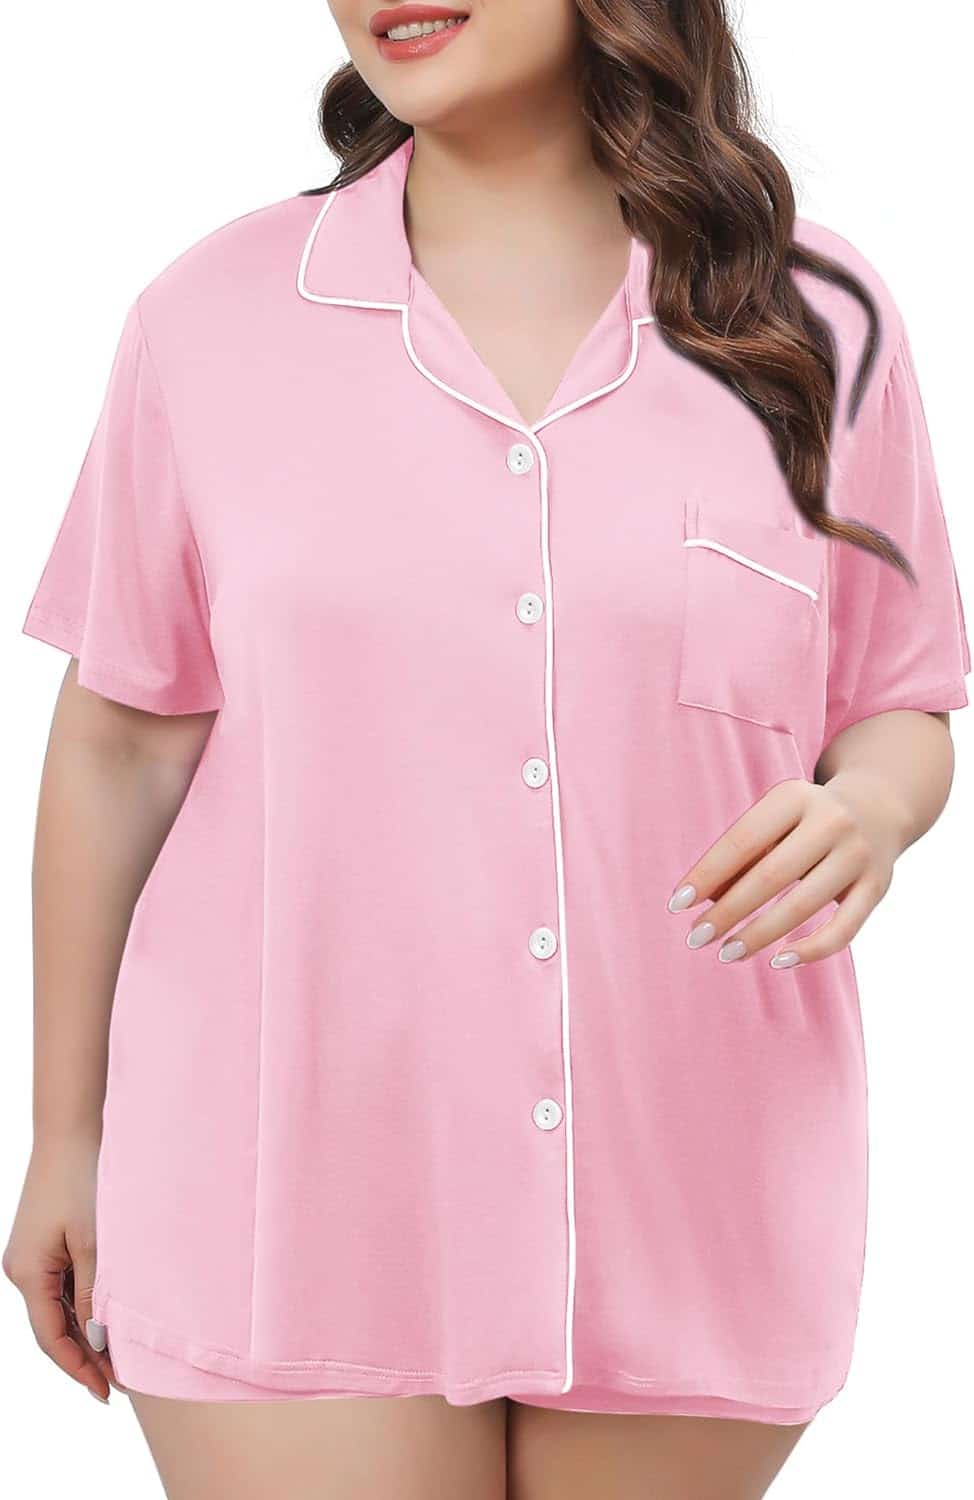 SWOMOG Women's Plus Size Pajamas Set: The Perfect Comfortable Sleepwear